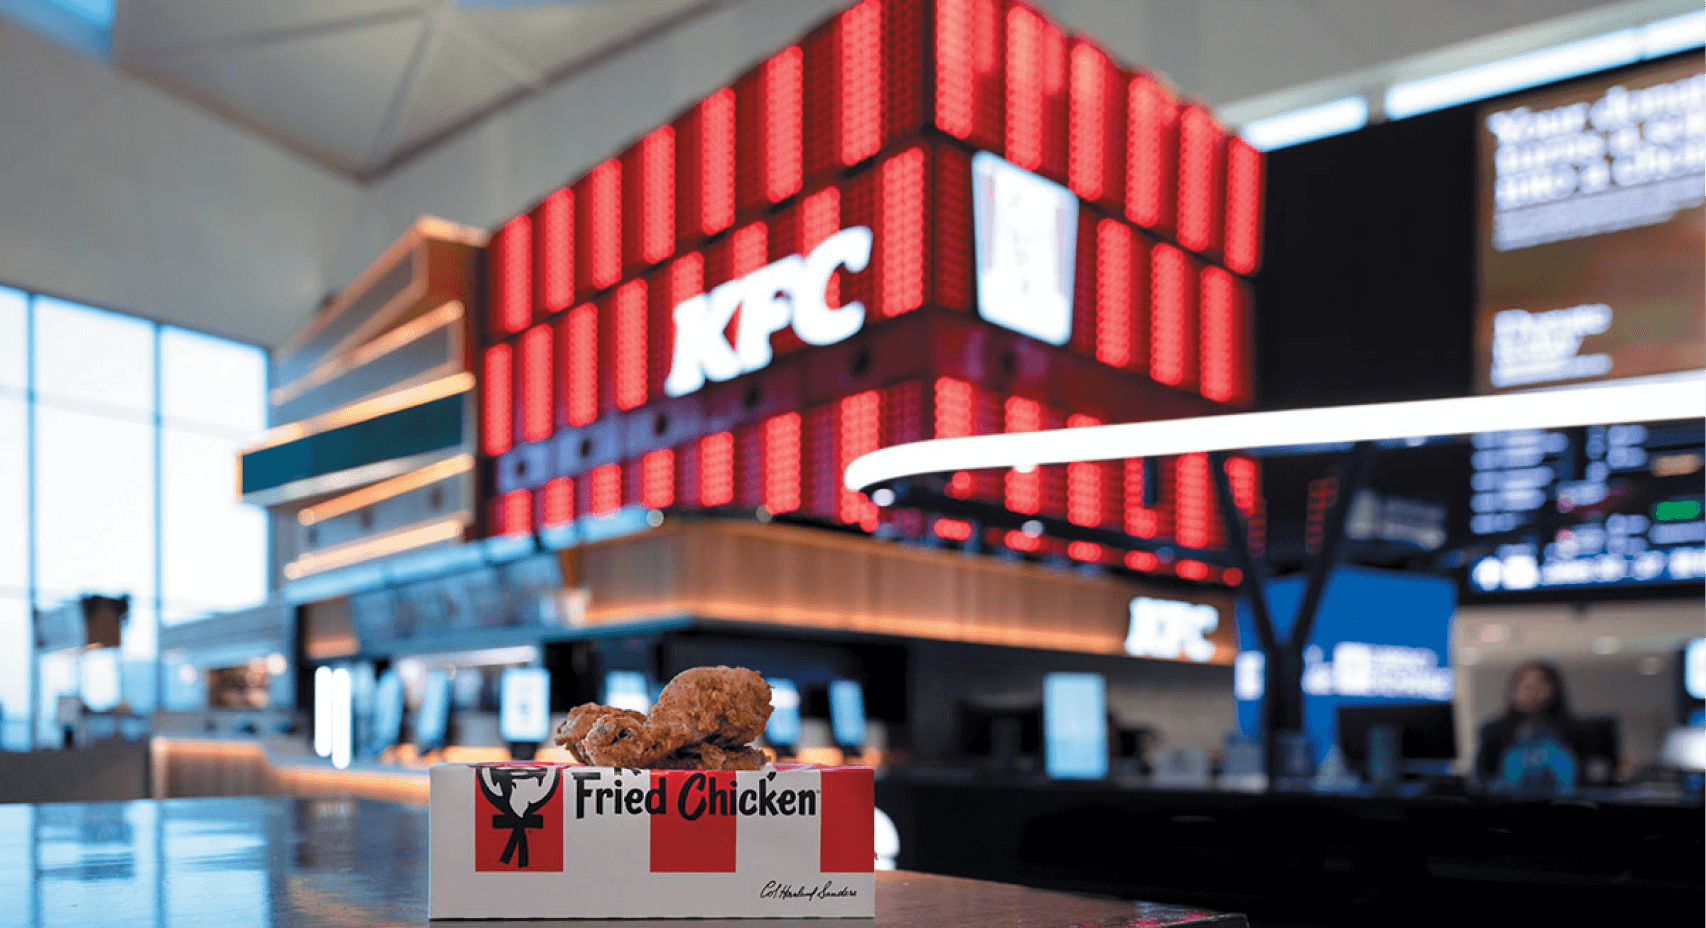 The KFC project